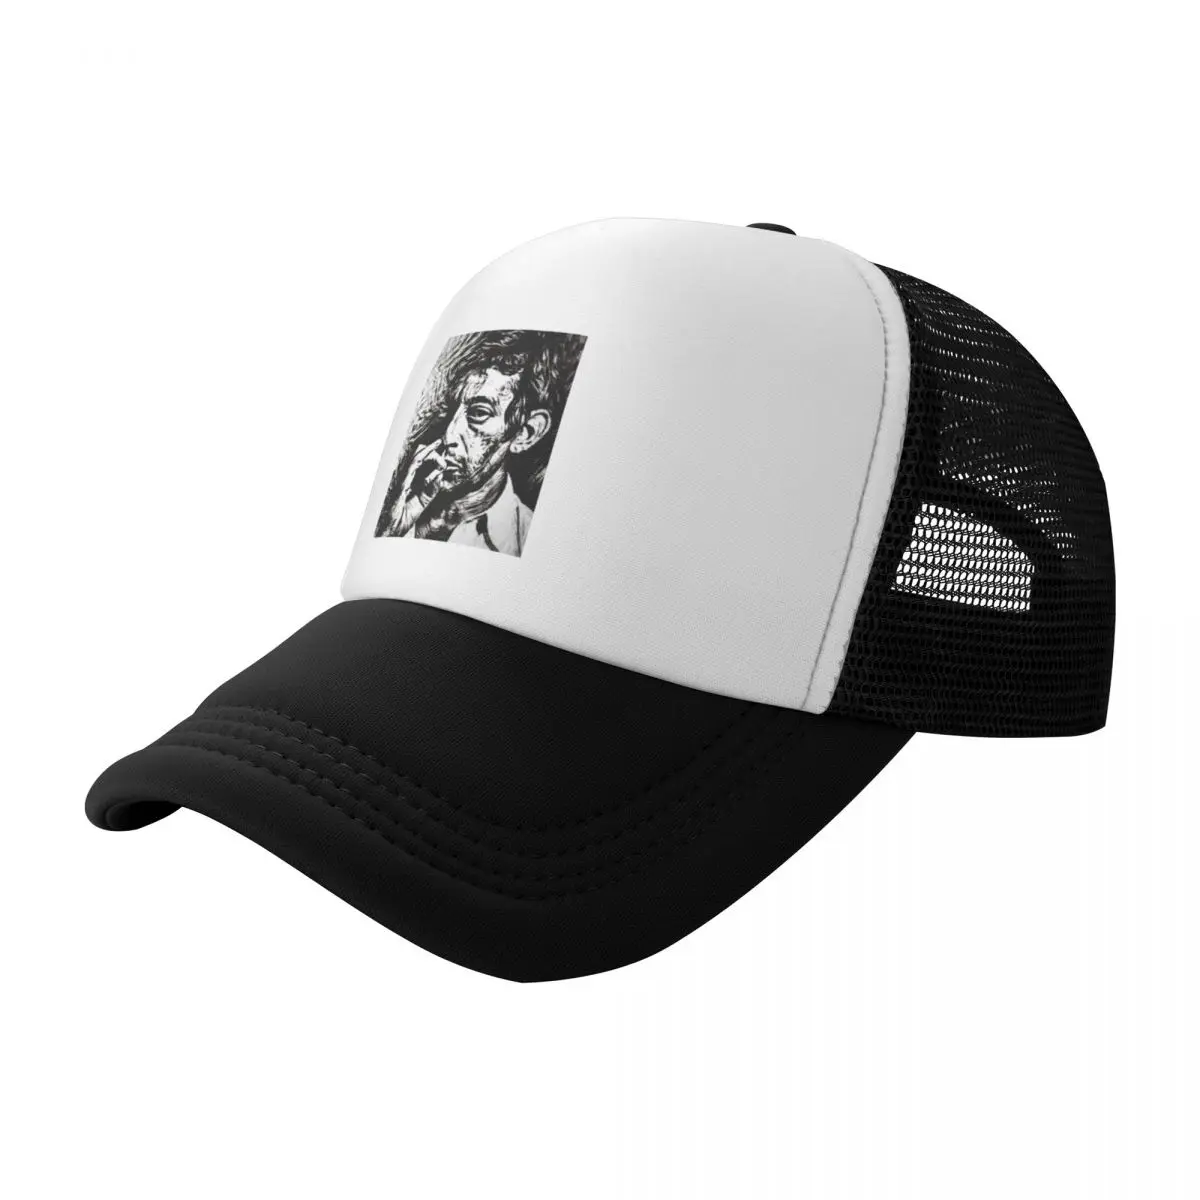 

Serge Gainsbourg Noirs Ne Dessin Blanc graphique Baseball Cap Visor Military Tactical Cap Luxury Cap custom Hat Woman Hats Men's